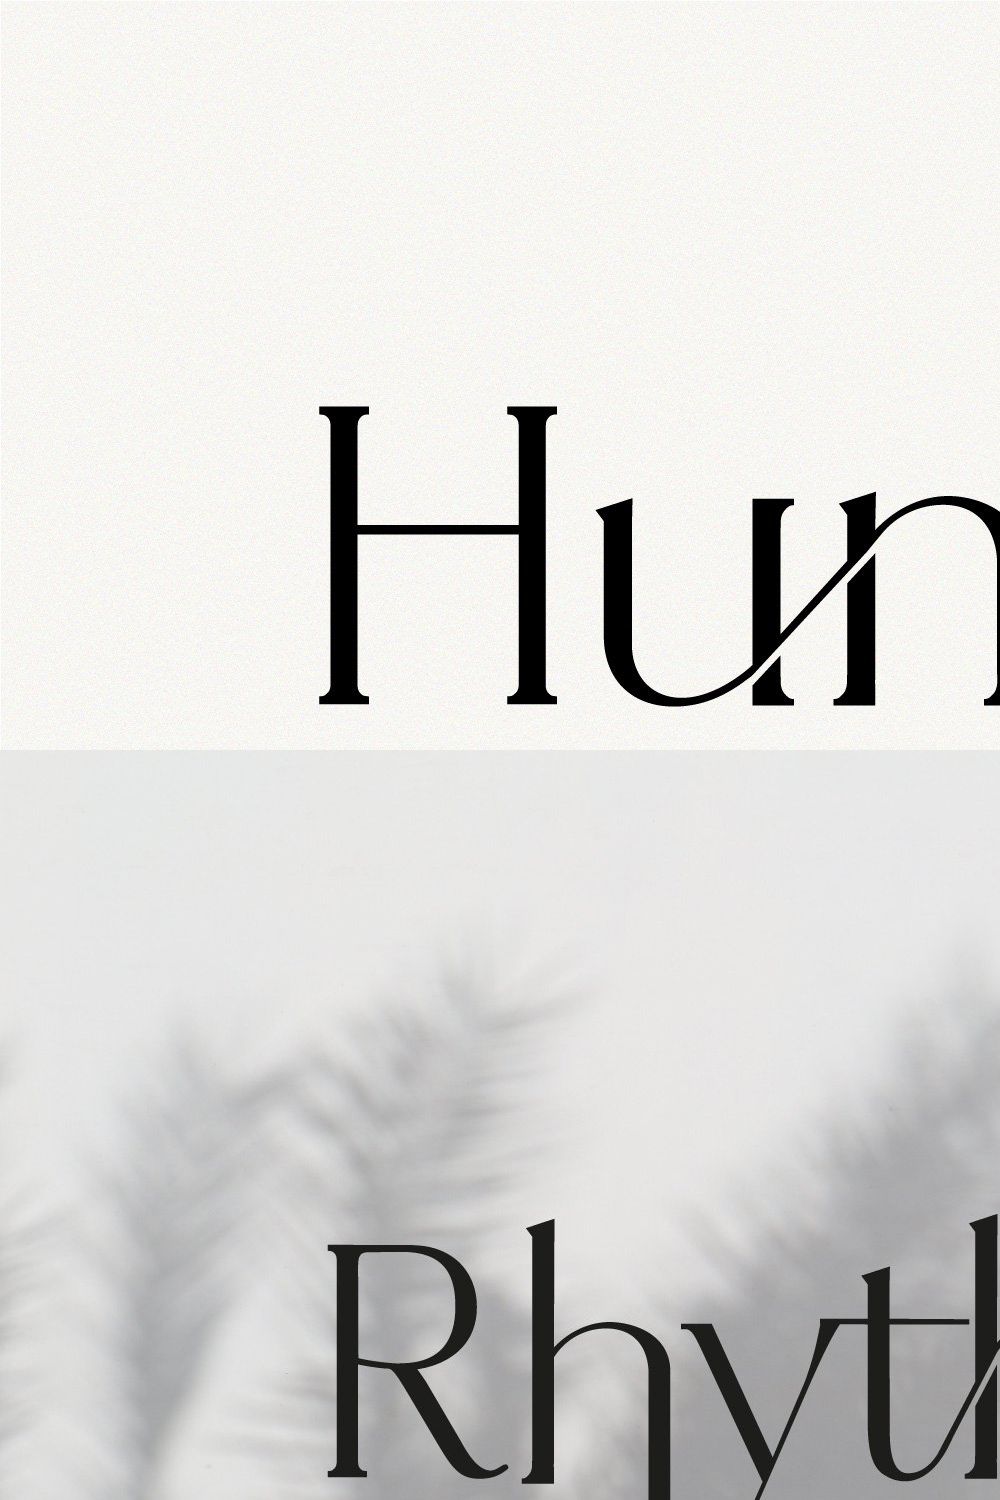 Hunter - Serif Ligature Font pinterest preview image.